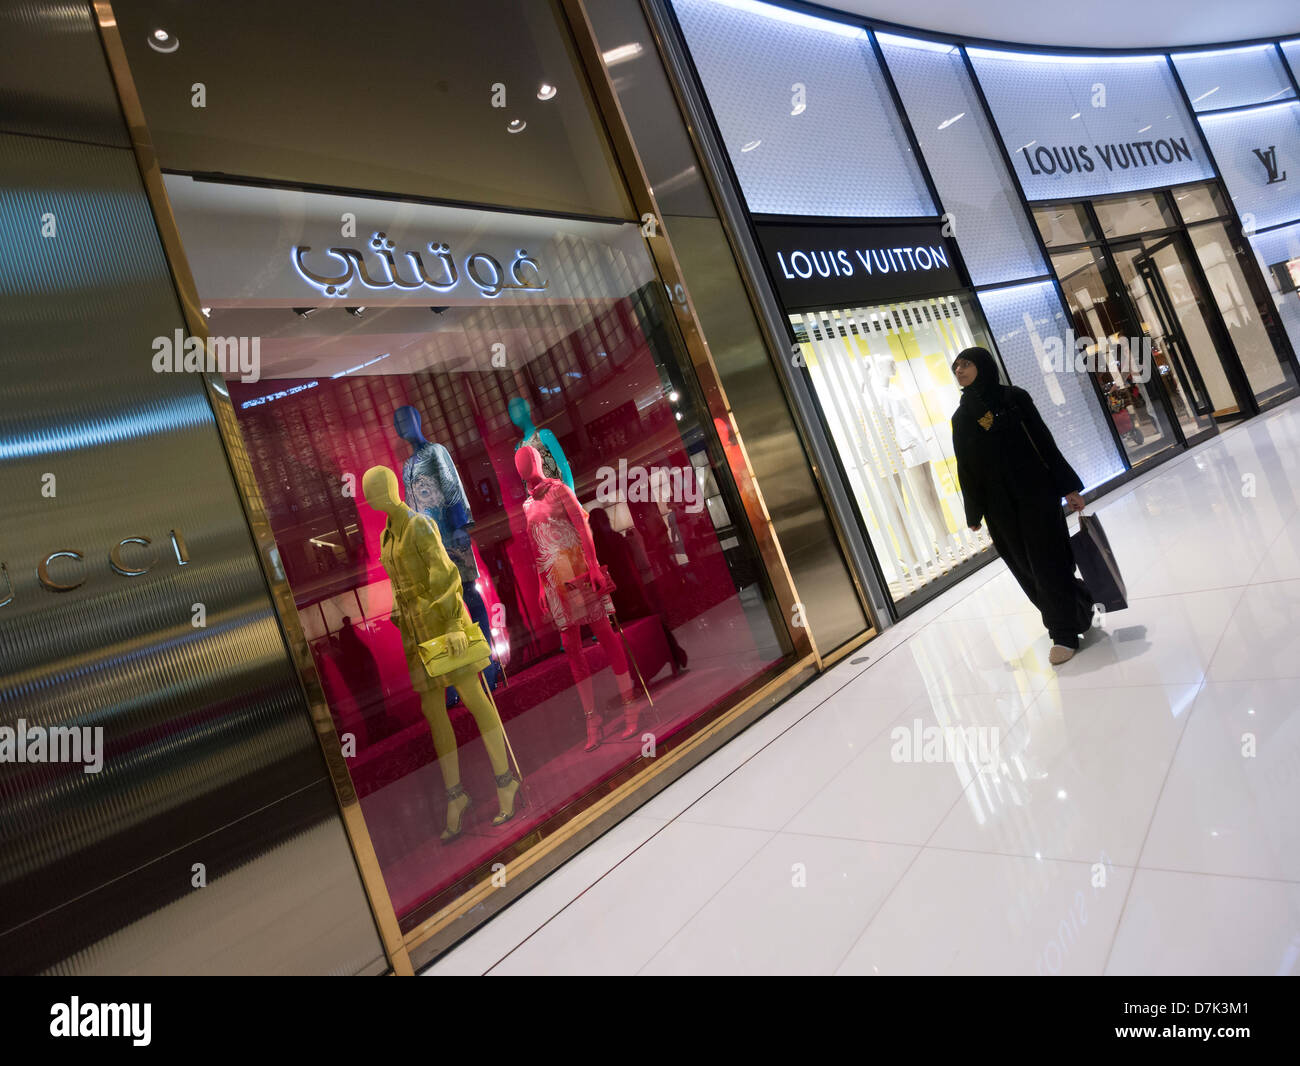 gucci emirates mall